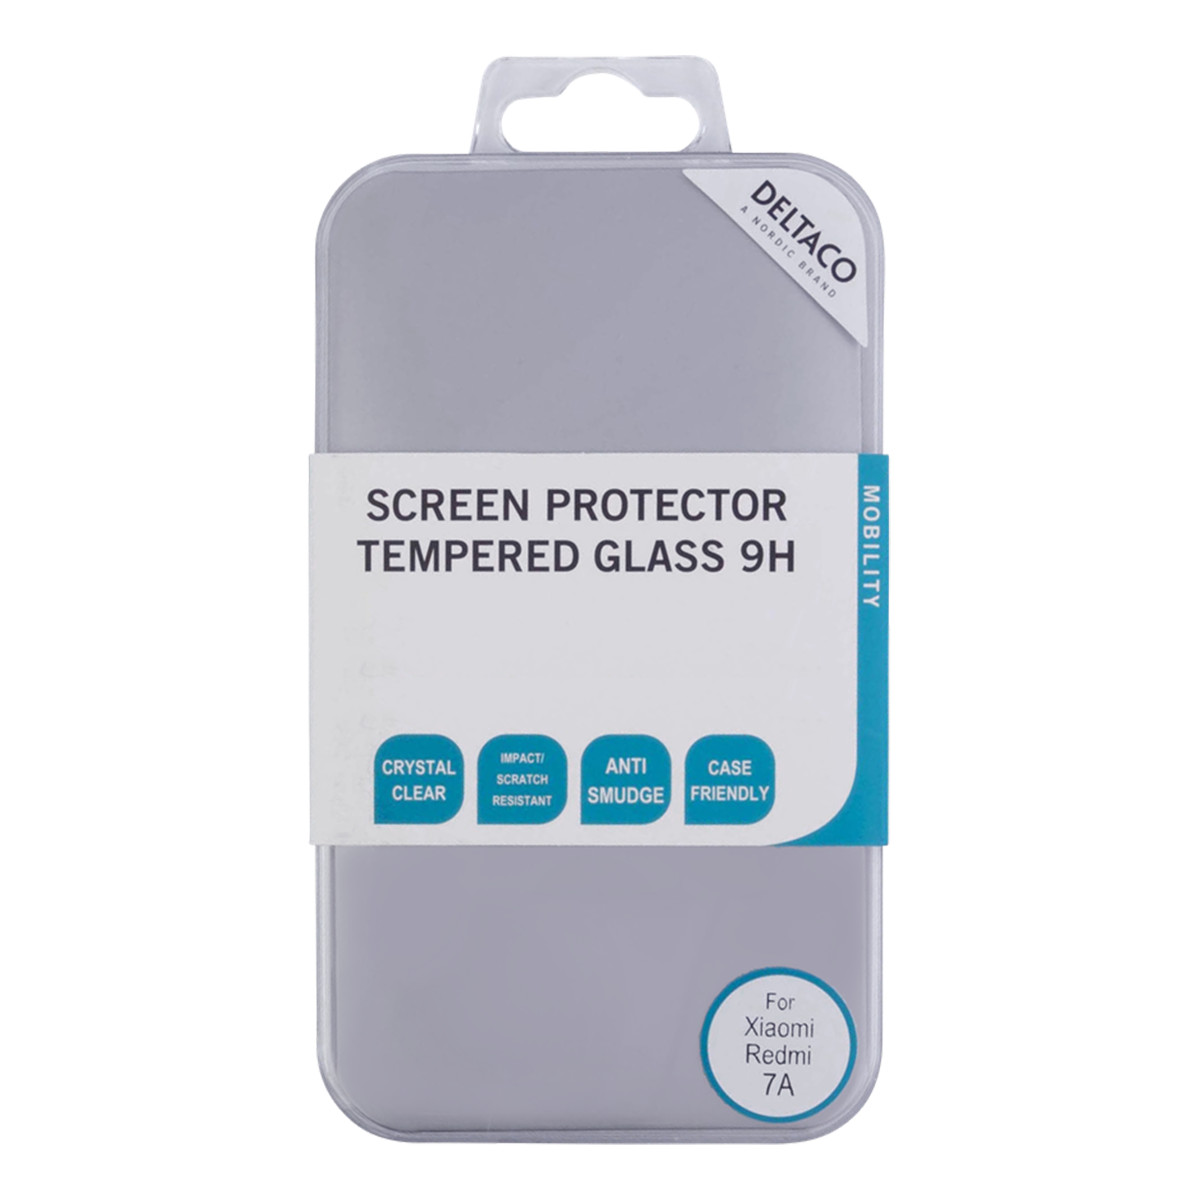 DELTACO screen protector, Xiaomi Redmi 7A, tempered glass